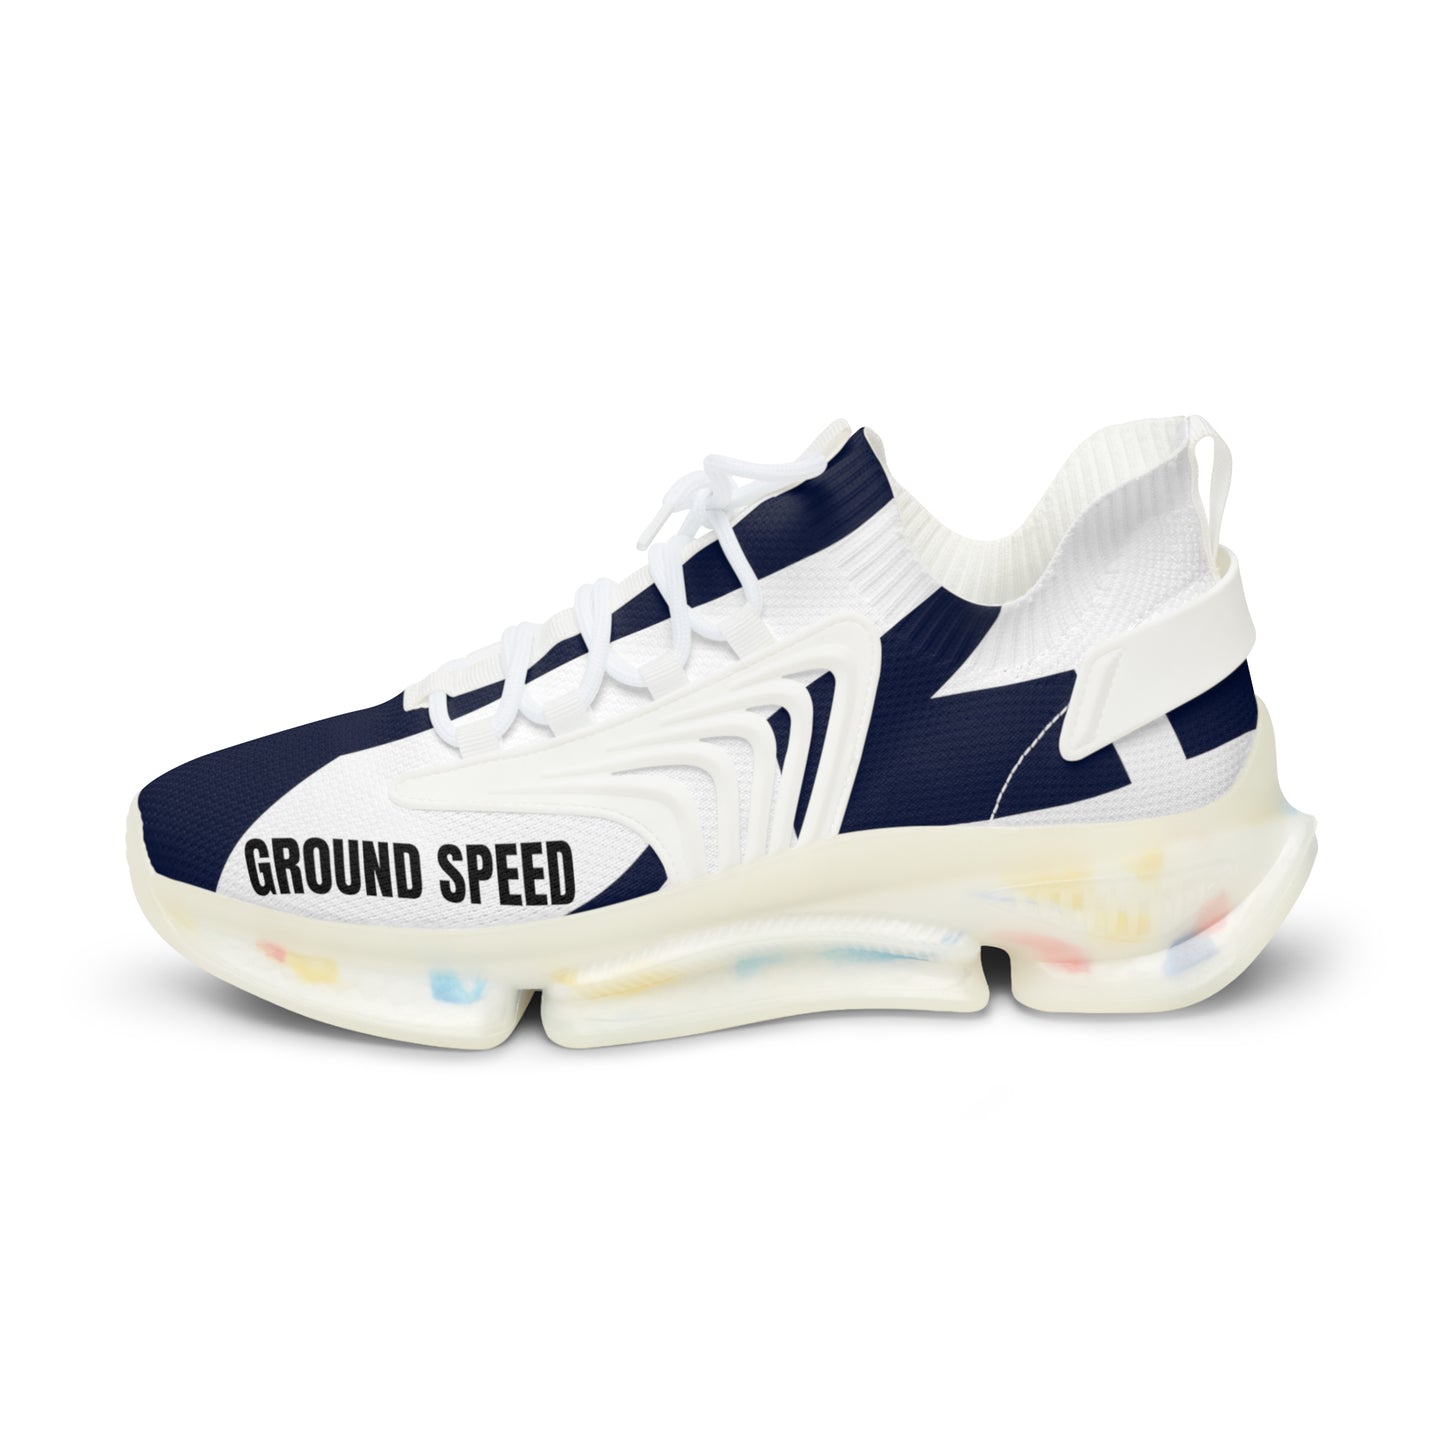 AirSailr Ground Speed Men's Mesh Sneakers